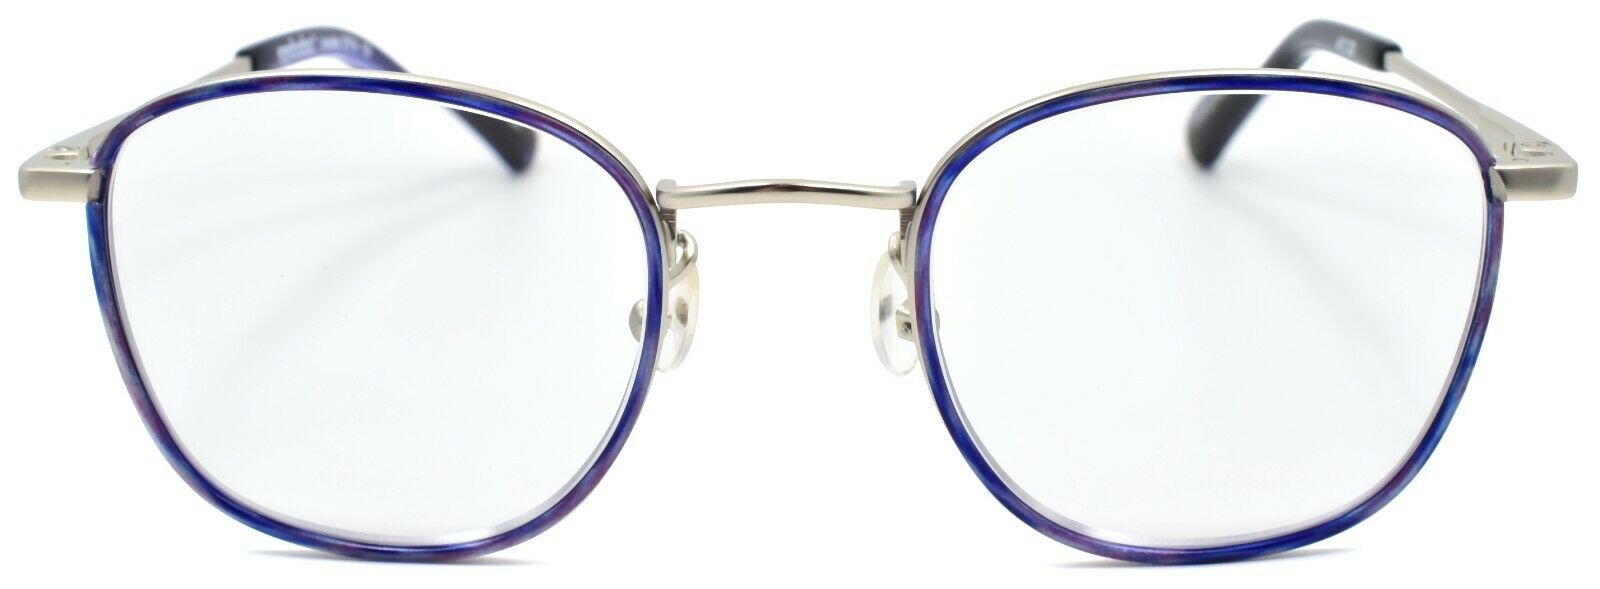 2-Eyebobs Inside 3174 10 Unisex Reading Glasses Blue / Silver +1.25-842754169455-IKSpecs